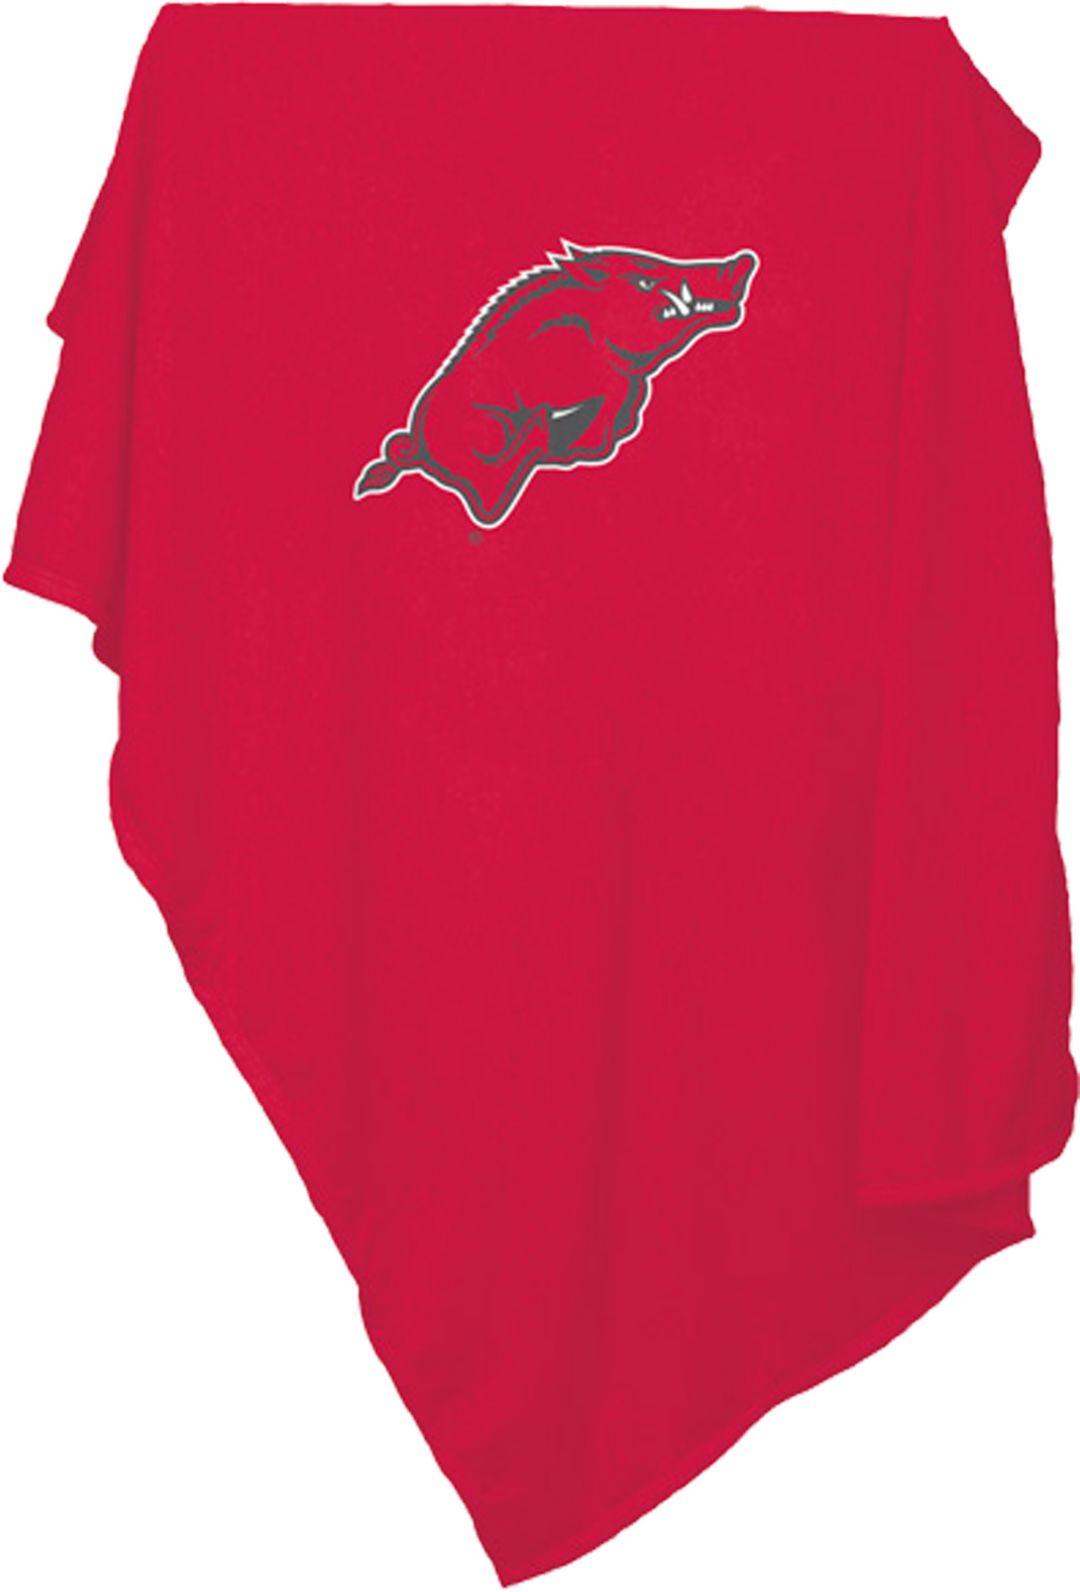 Arkansas Logo - Logo Arkansas Razorbacks Sweatshirt Blanket